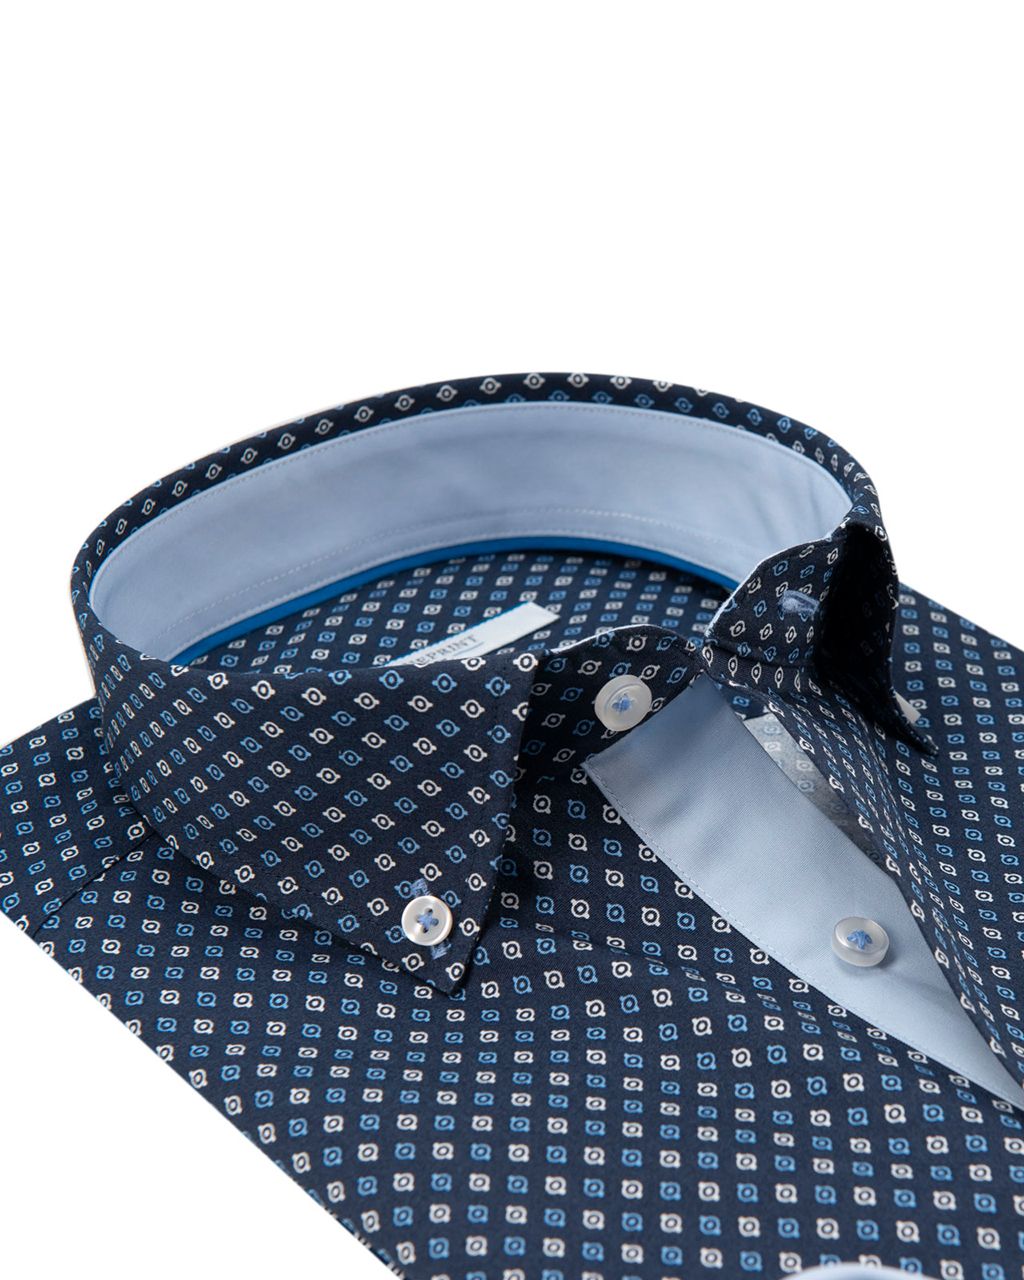 The BLUEPRINT Premium Trendy overhemd LM Donkerblauw dessin 053722-001-L